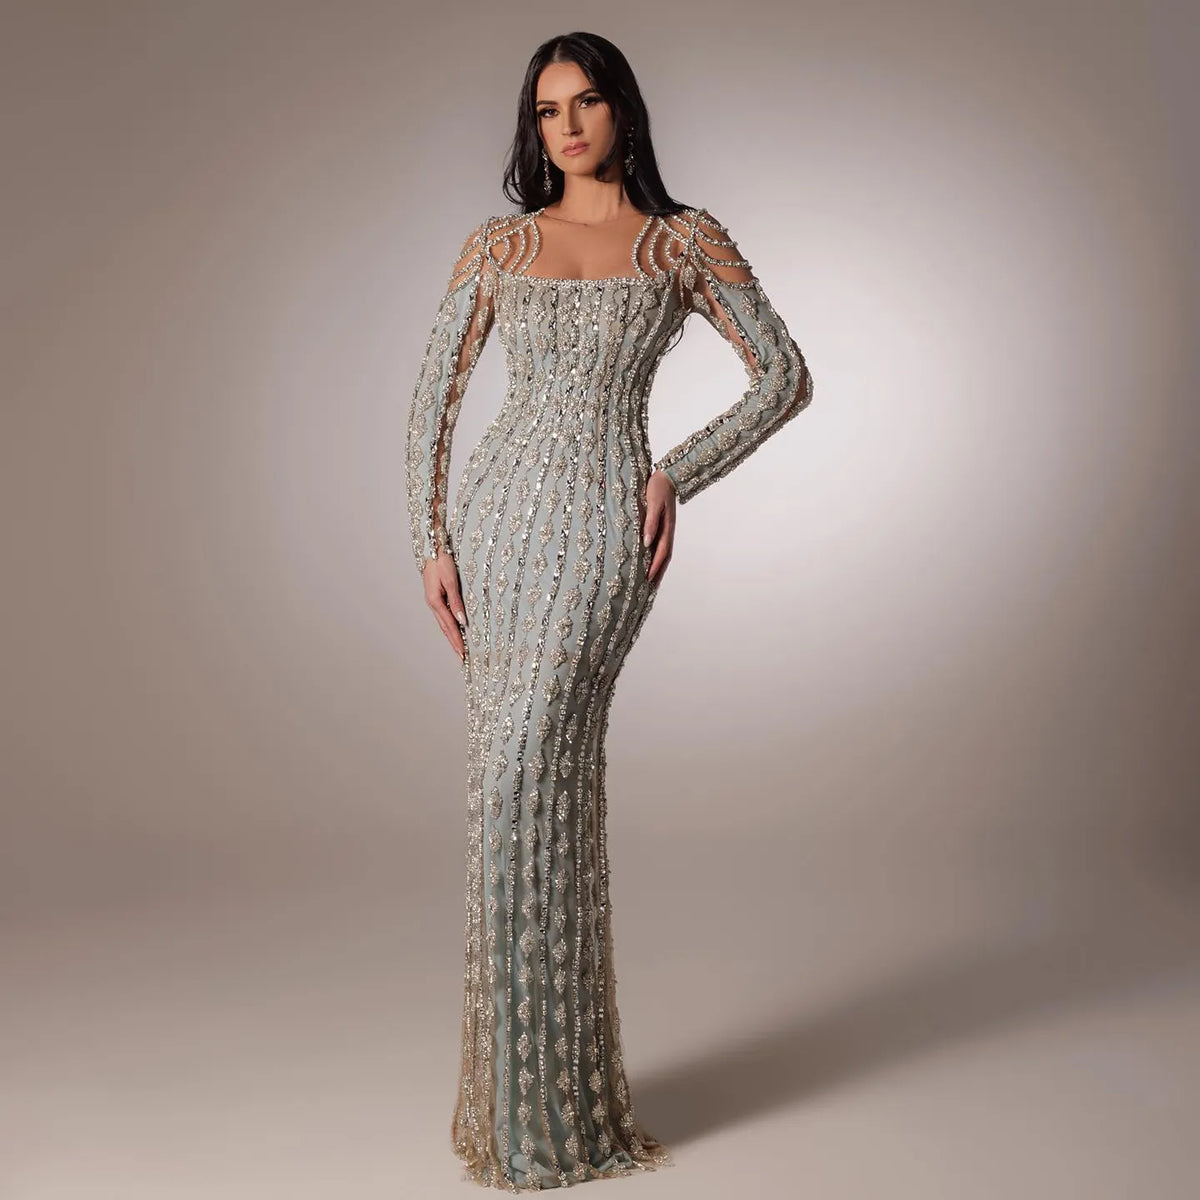 Sharon Said Luxury Arabic Sage Green Dubai Evening Dresses Mermaid Muslim Long Sleeves Islamic Women Wedding Party Gowns SS398